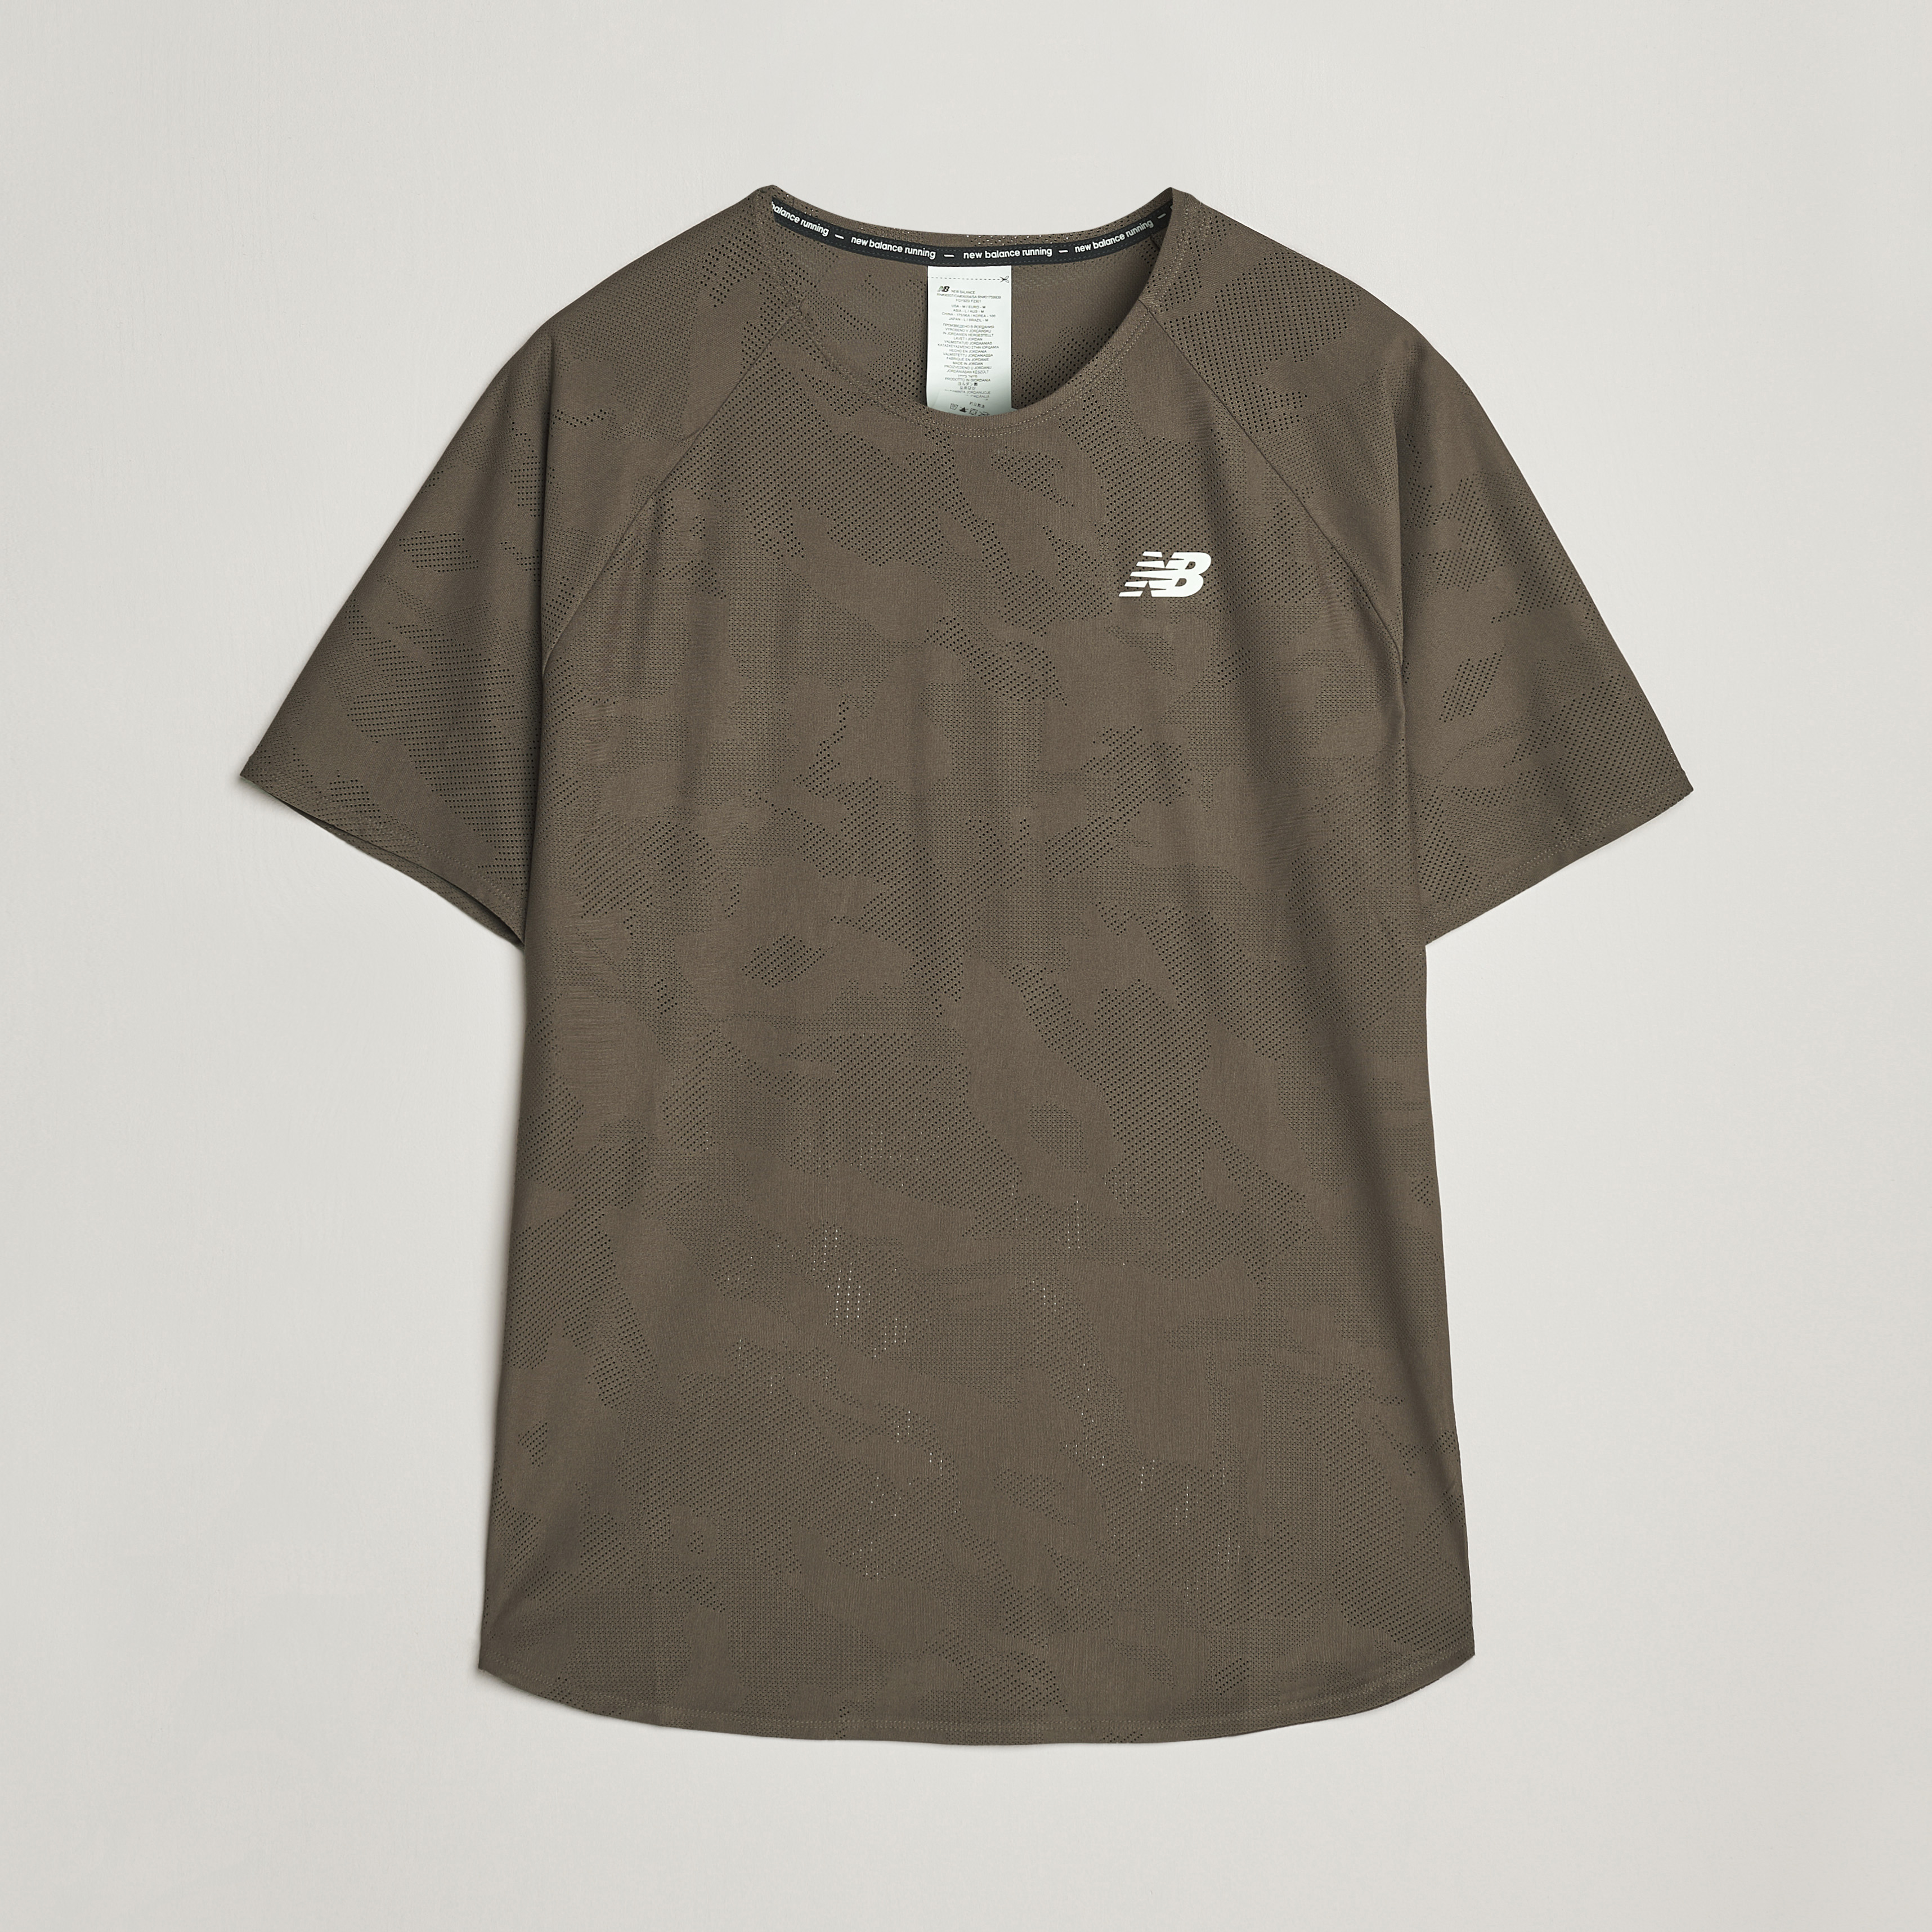 [Überraschender Preis] New Balance Running Dark Q Speed T-Shirt Mushroom at Jacquard